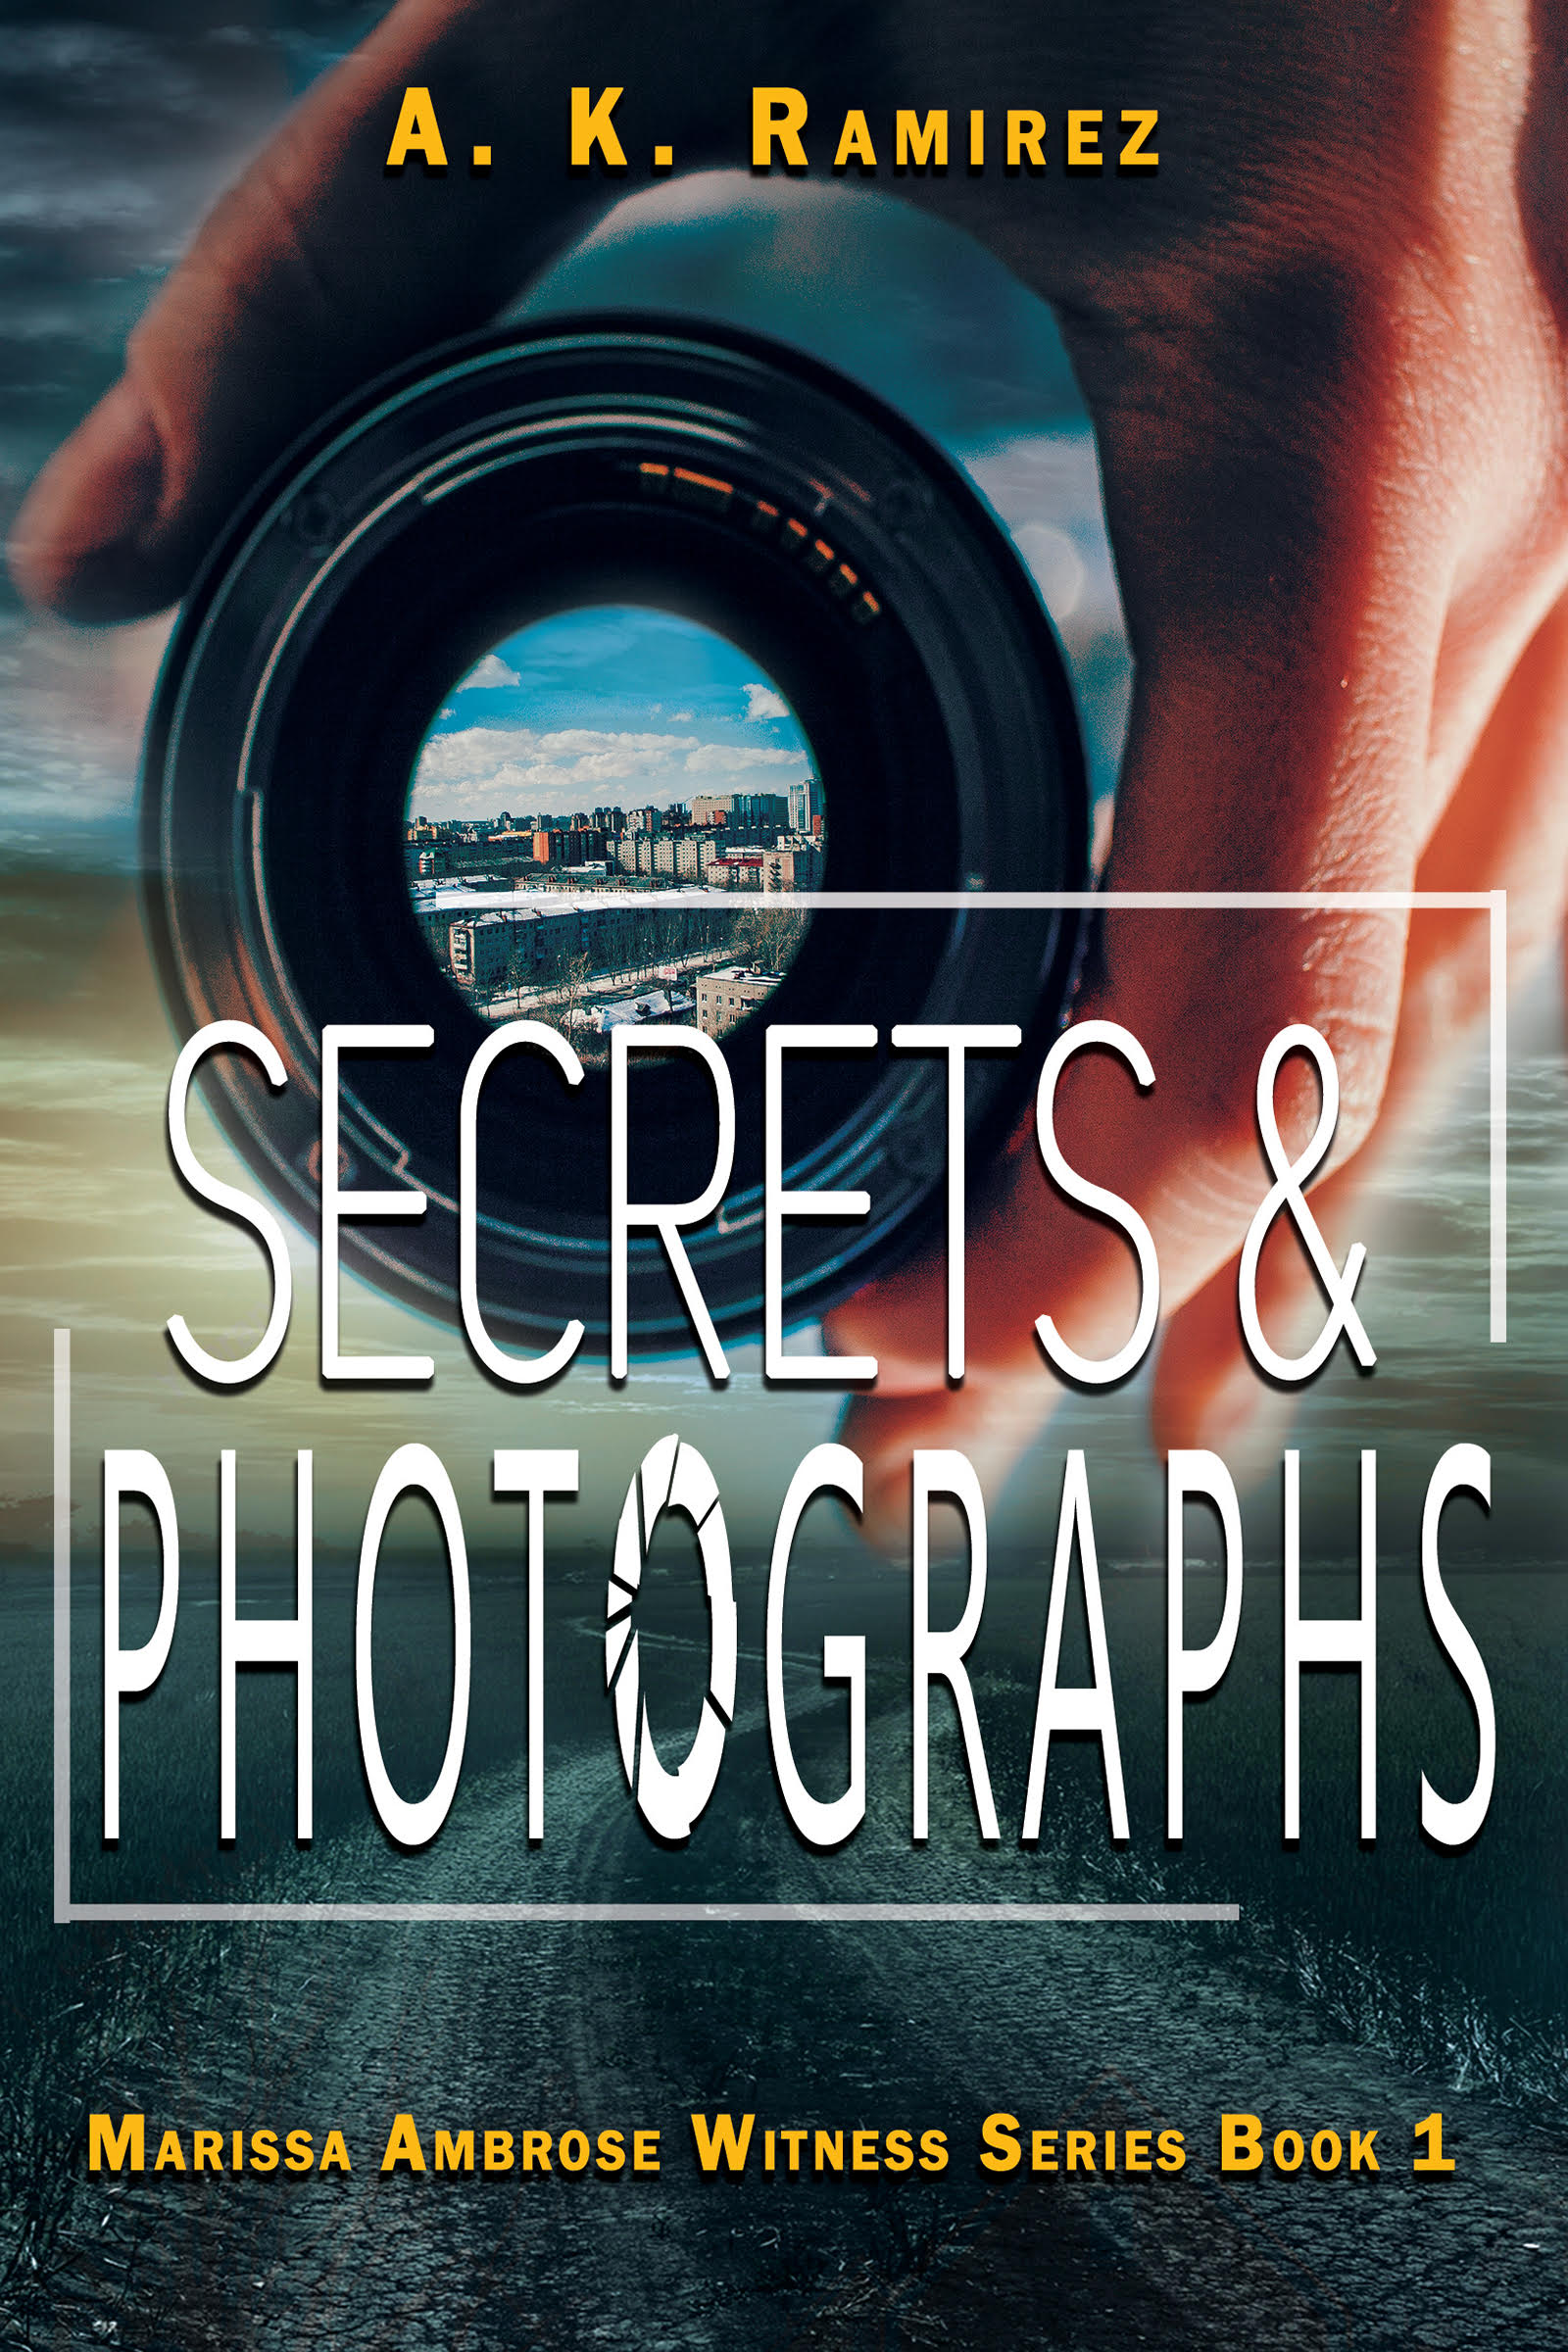 Secrets and Photographs by A. K. Ramirez